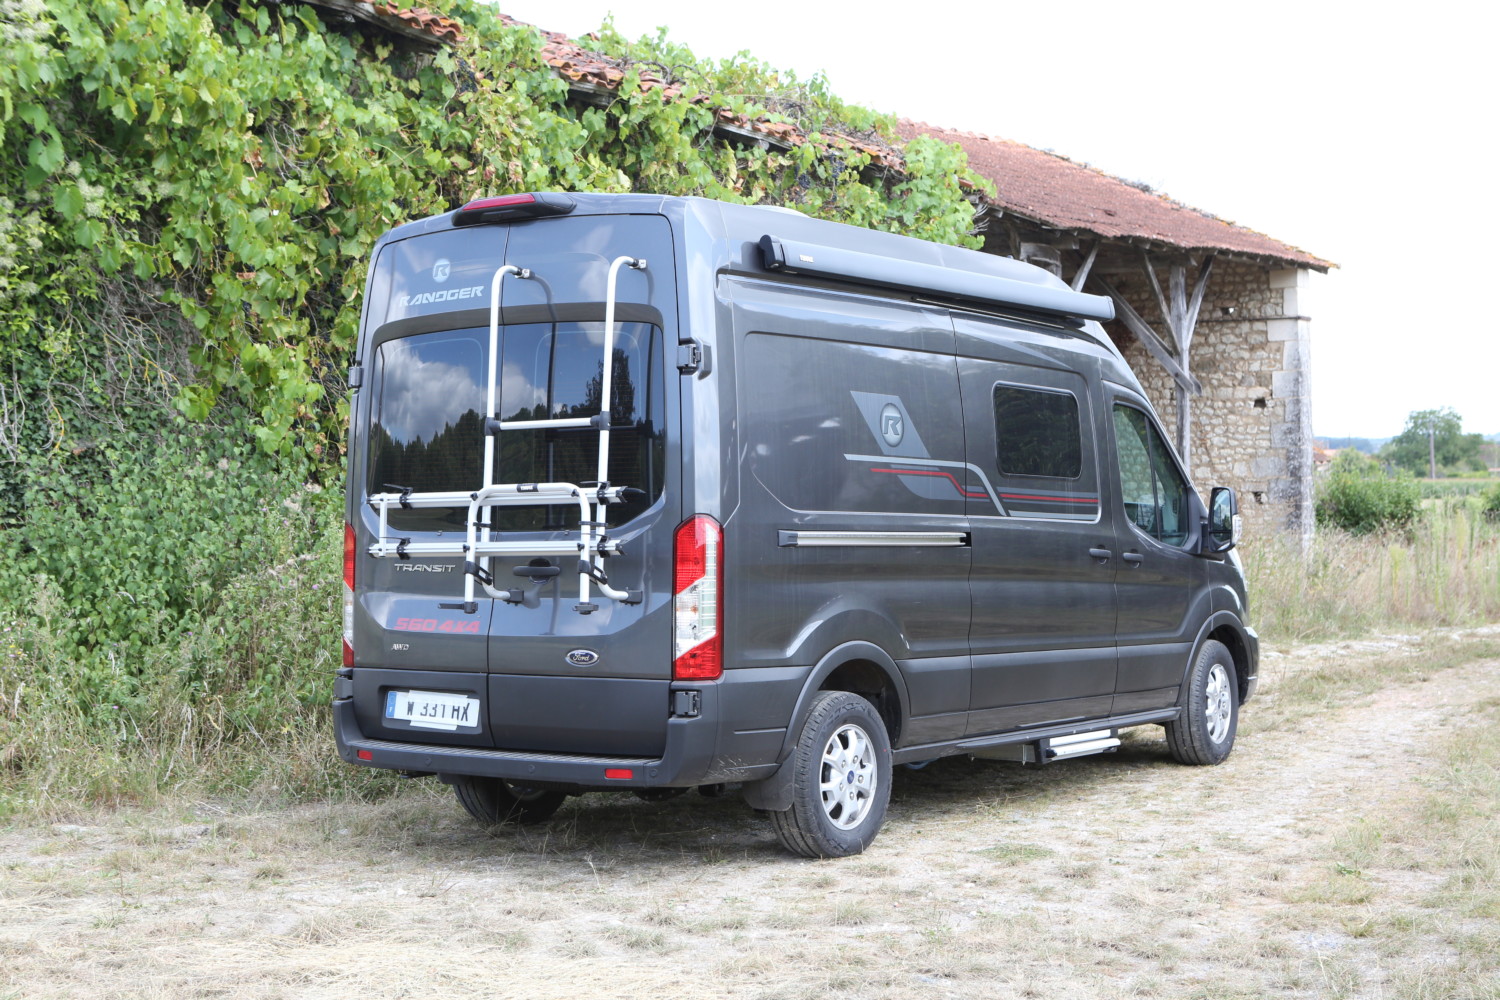 Randger R560 4×4 (Planet Van)